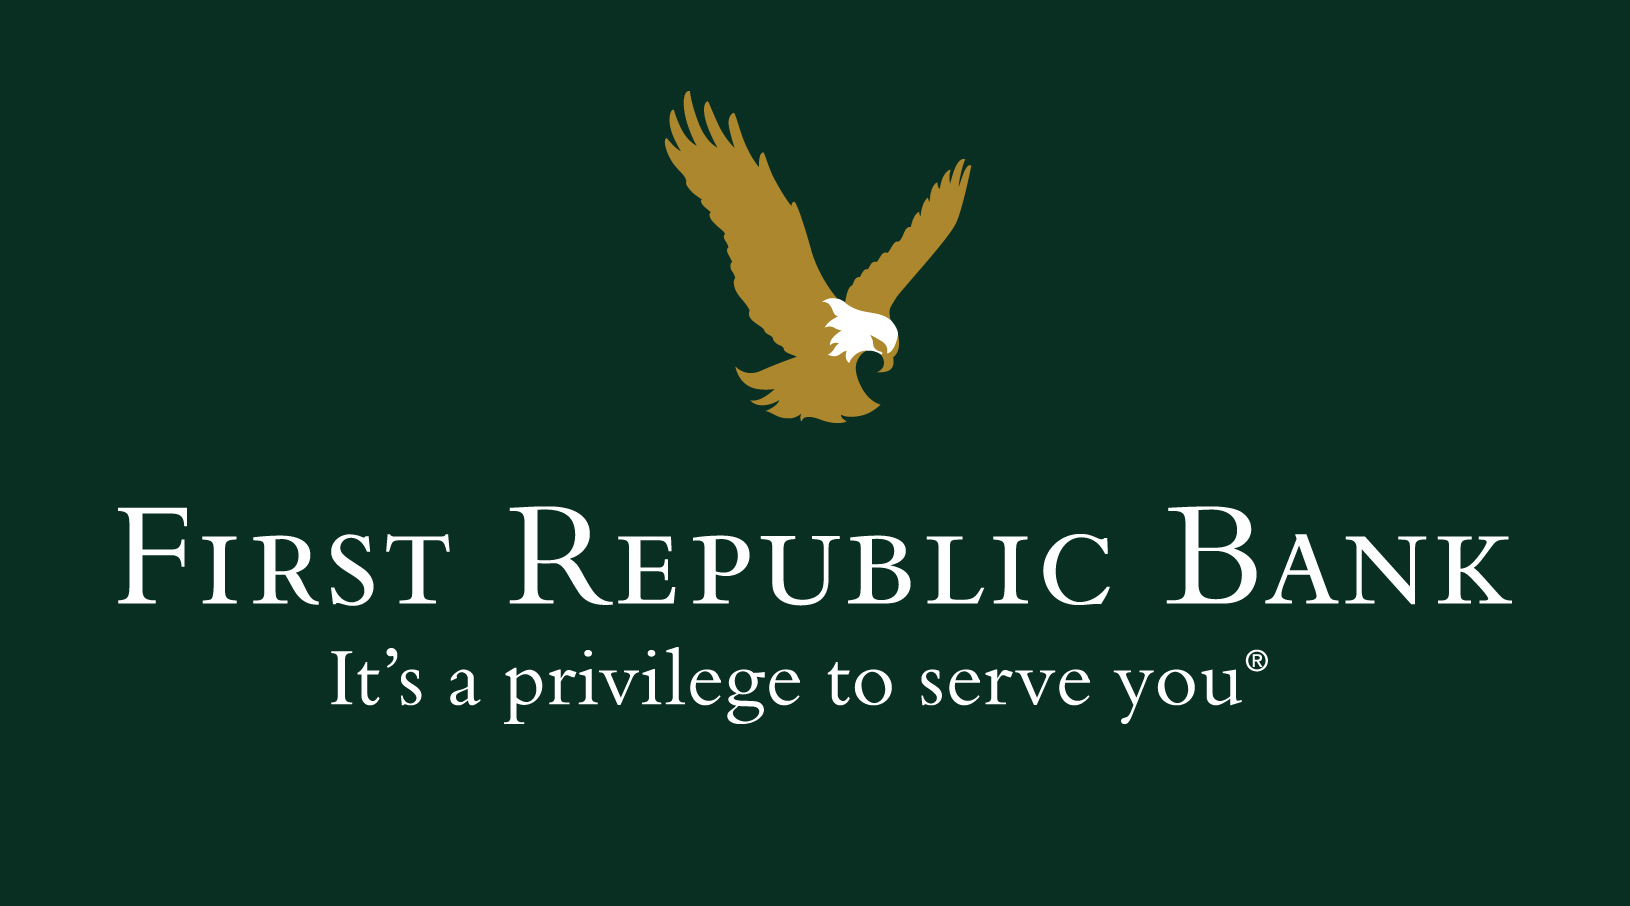 First Republic Bank logo